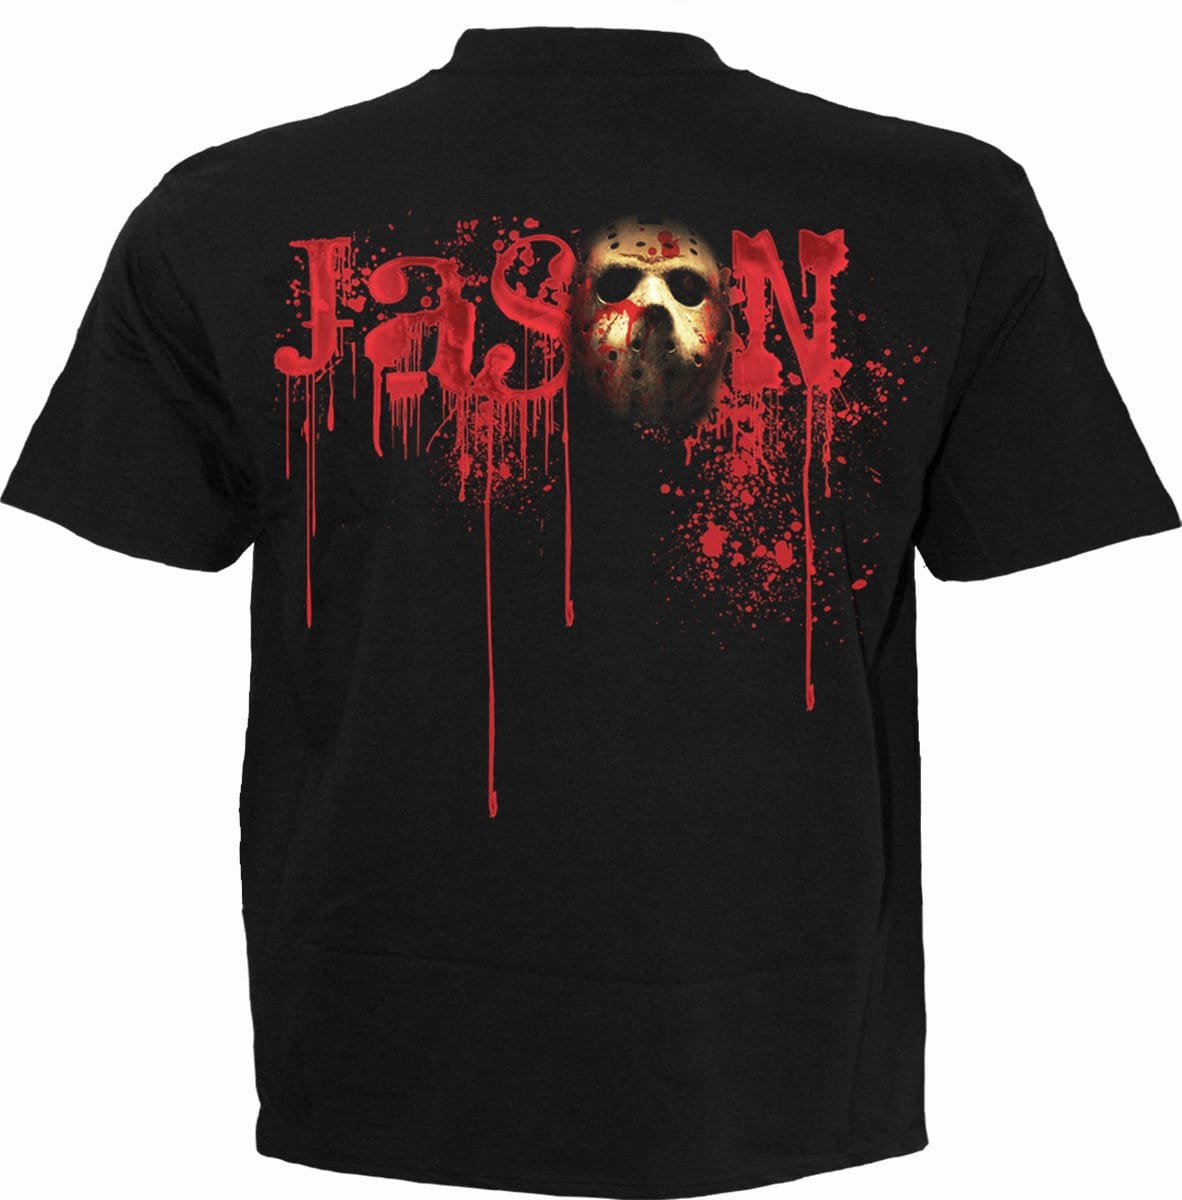 FRIDAY 13TH - JASON LIVES - T-Shirt Black - Spiral USA